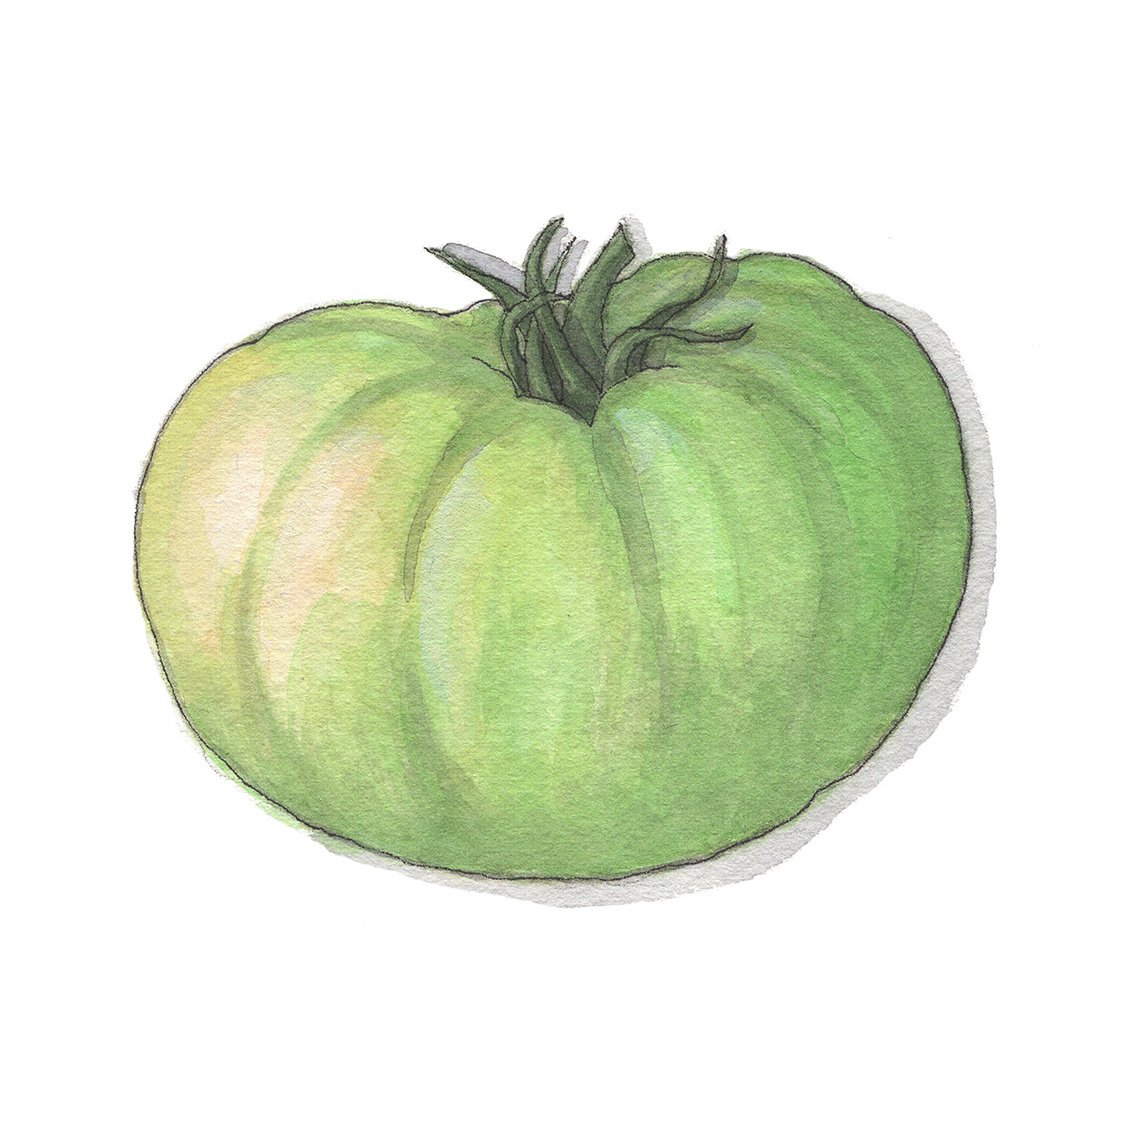 Green Beefsteak Tomato